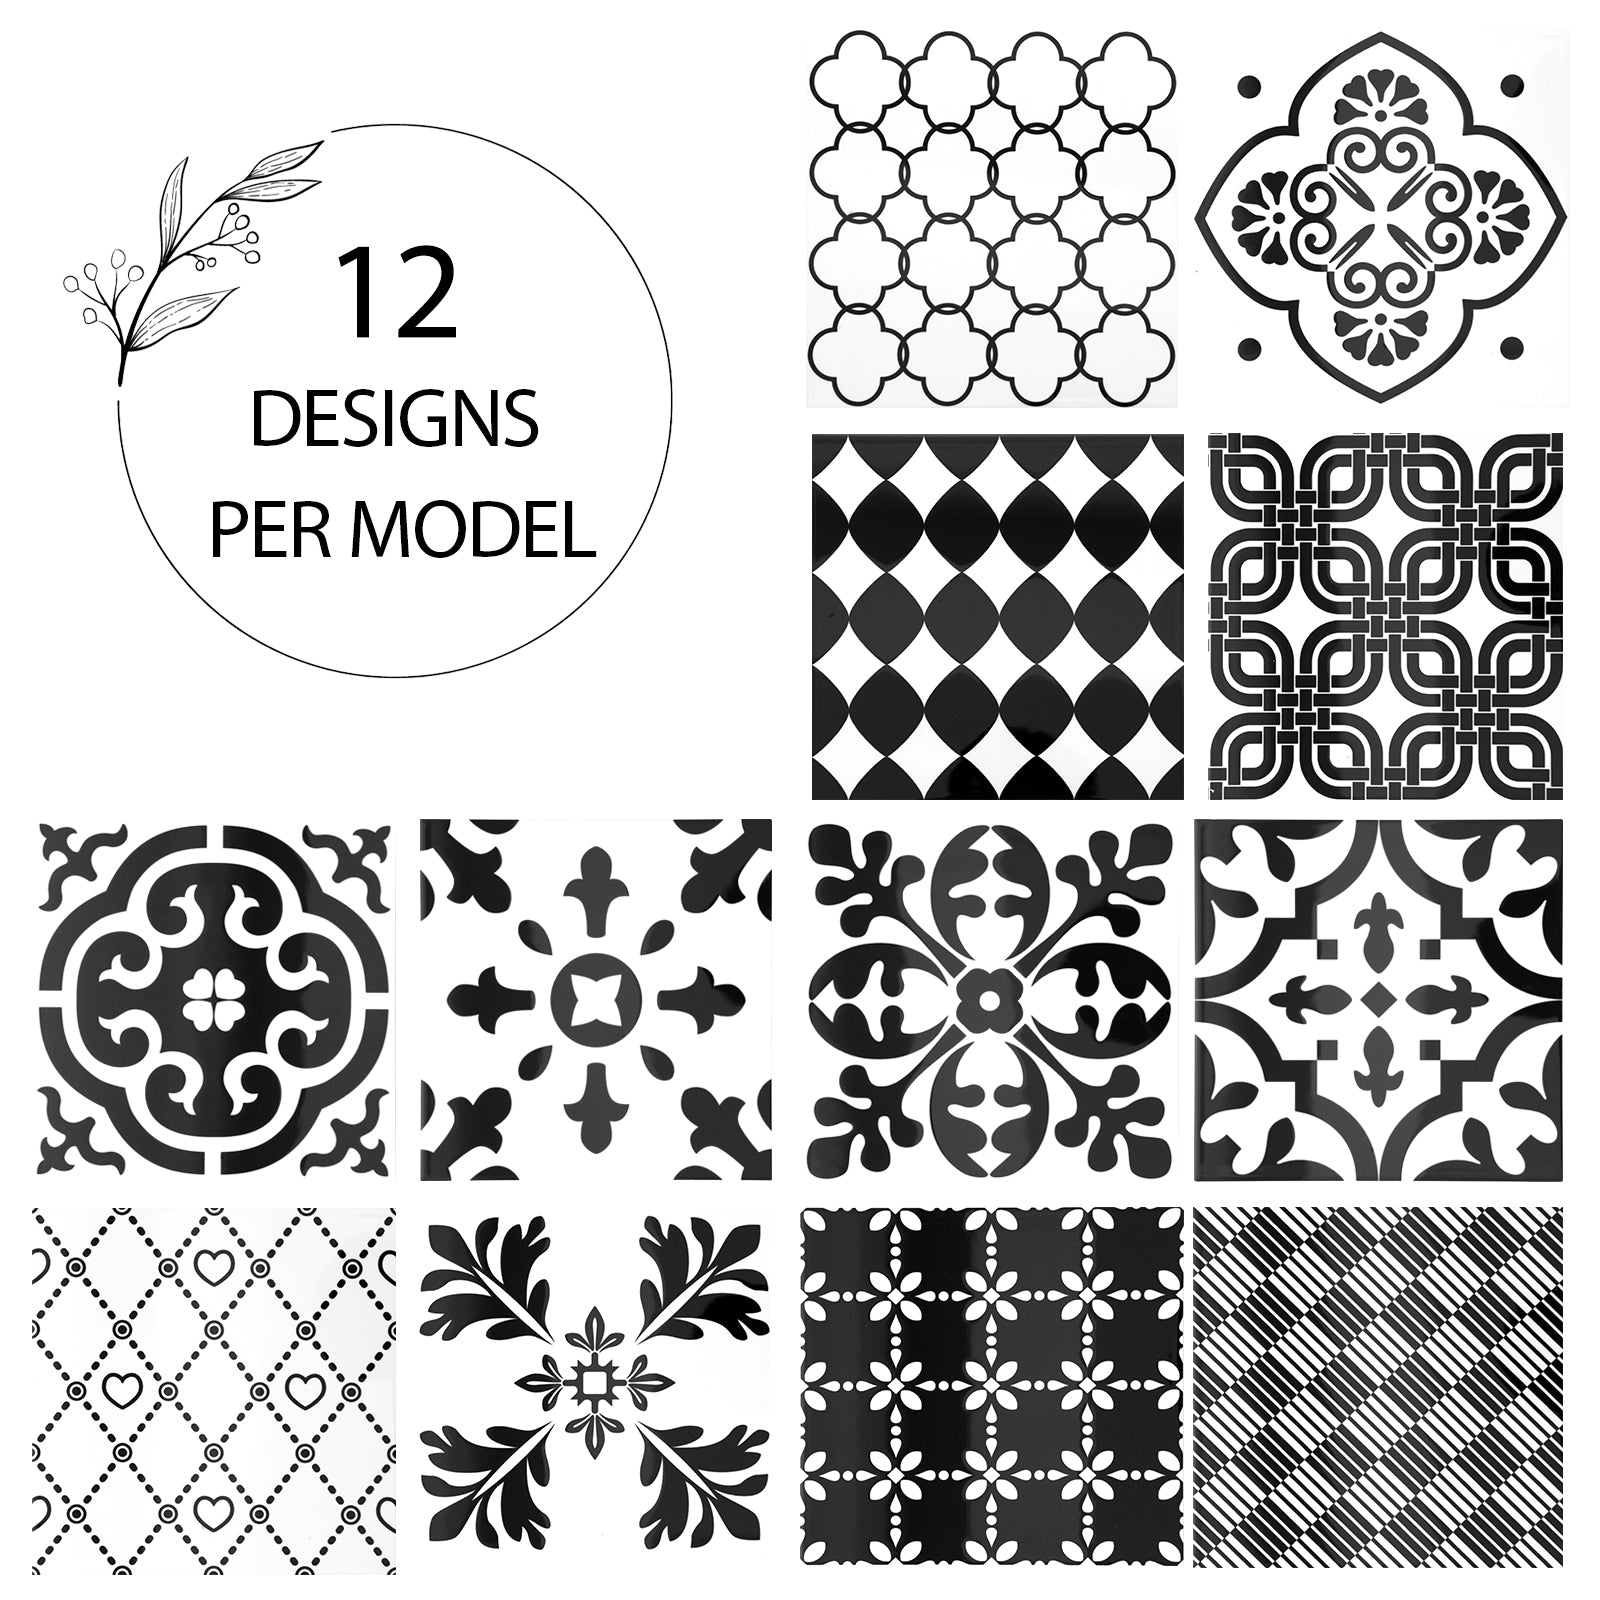 12 designs per model tile